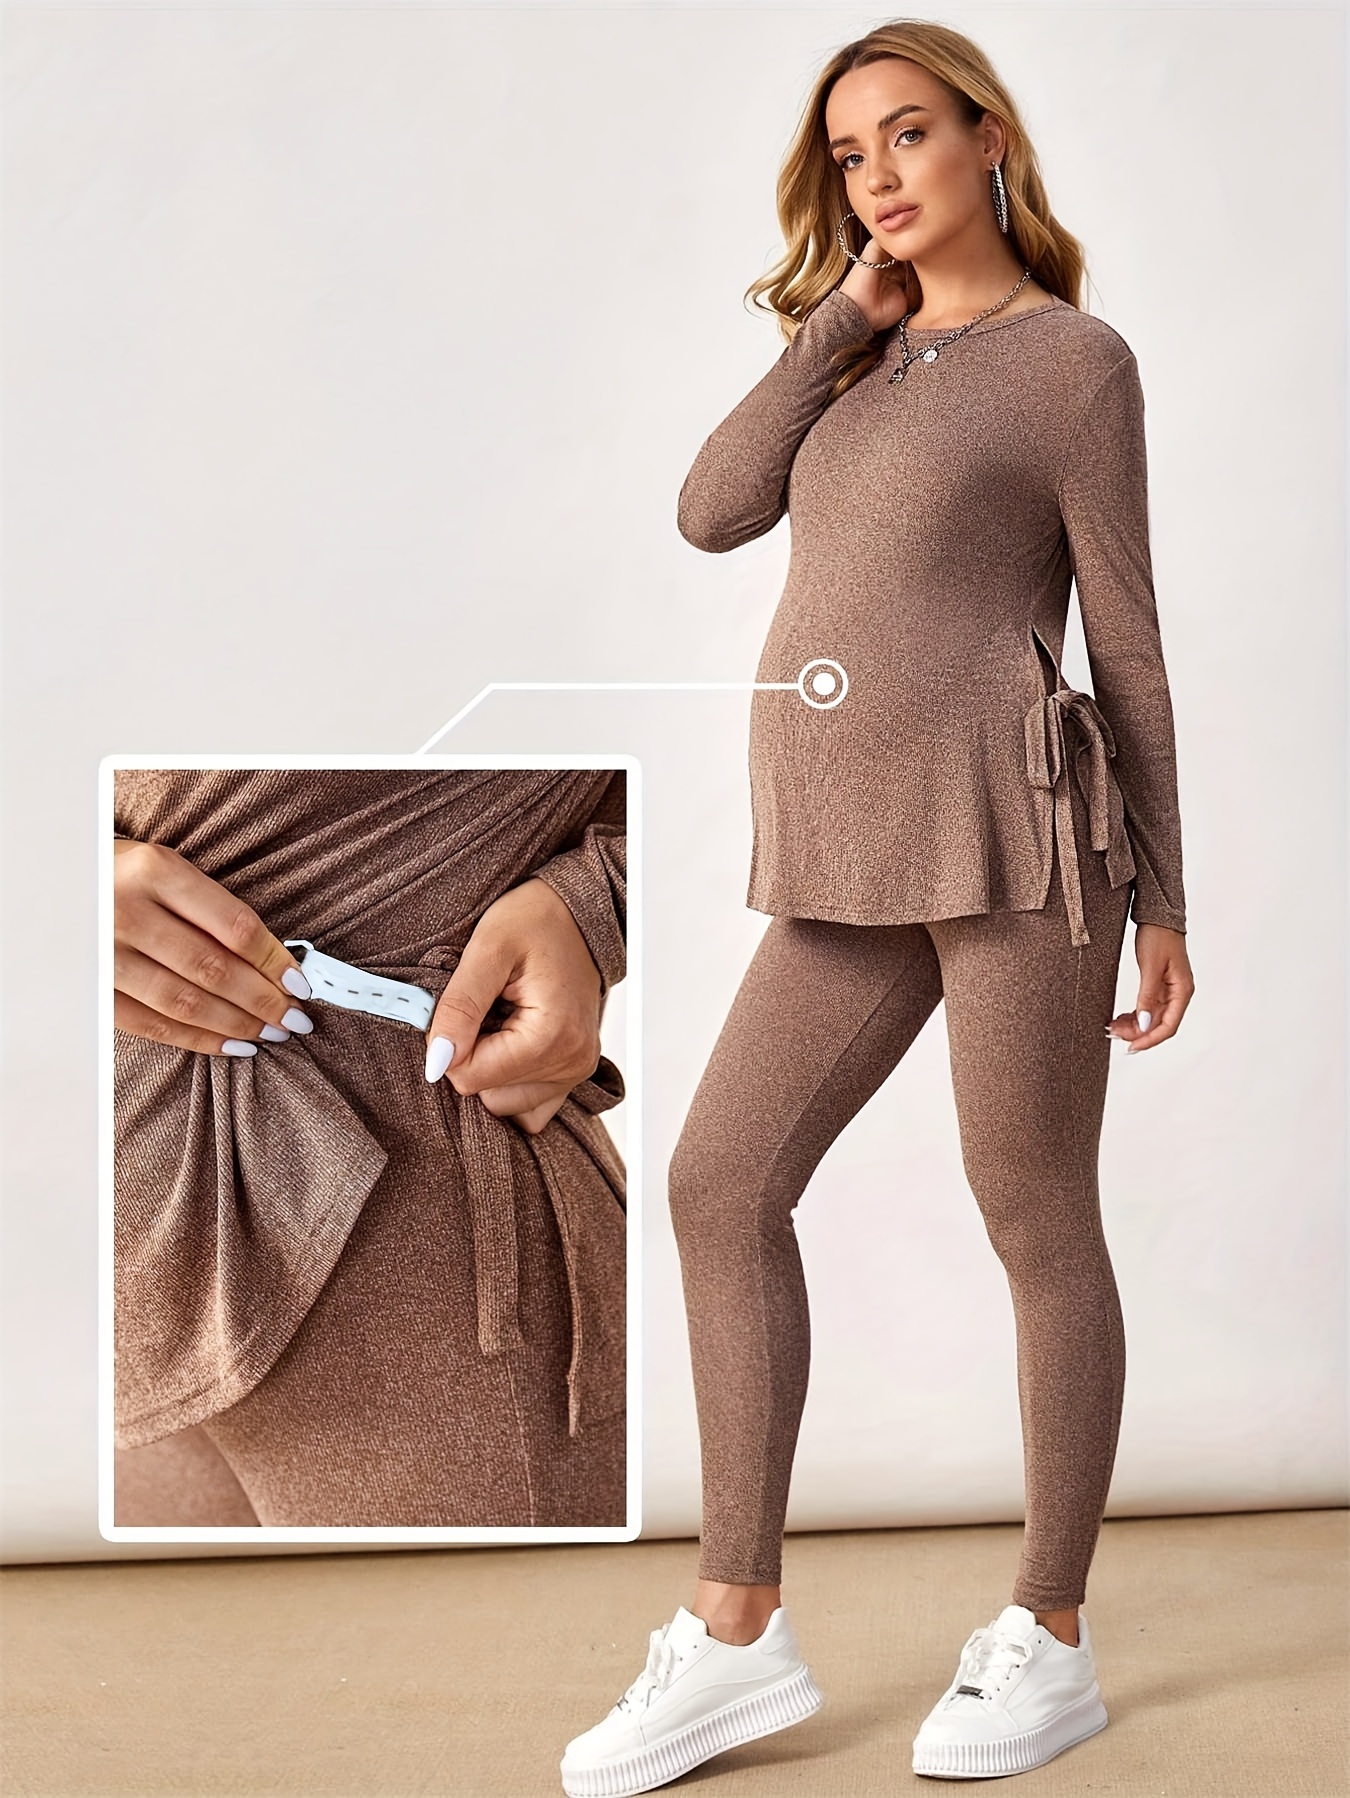 High waist Adjustable Warm Maternity Leggings pregnancy dress